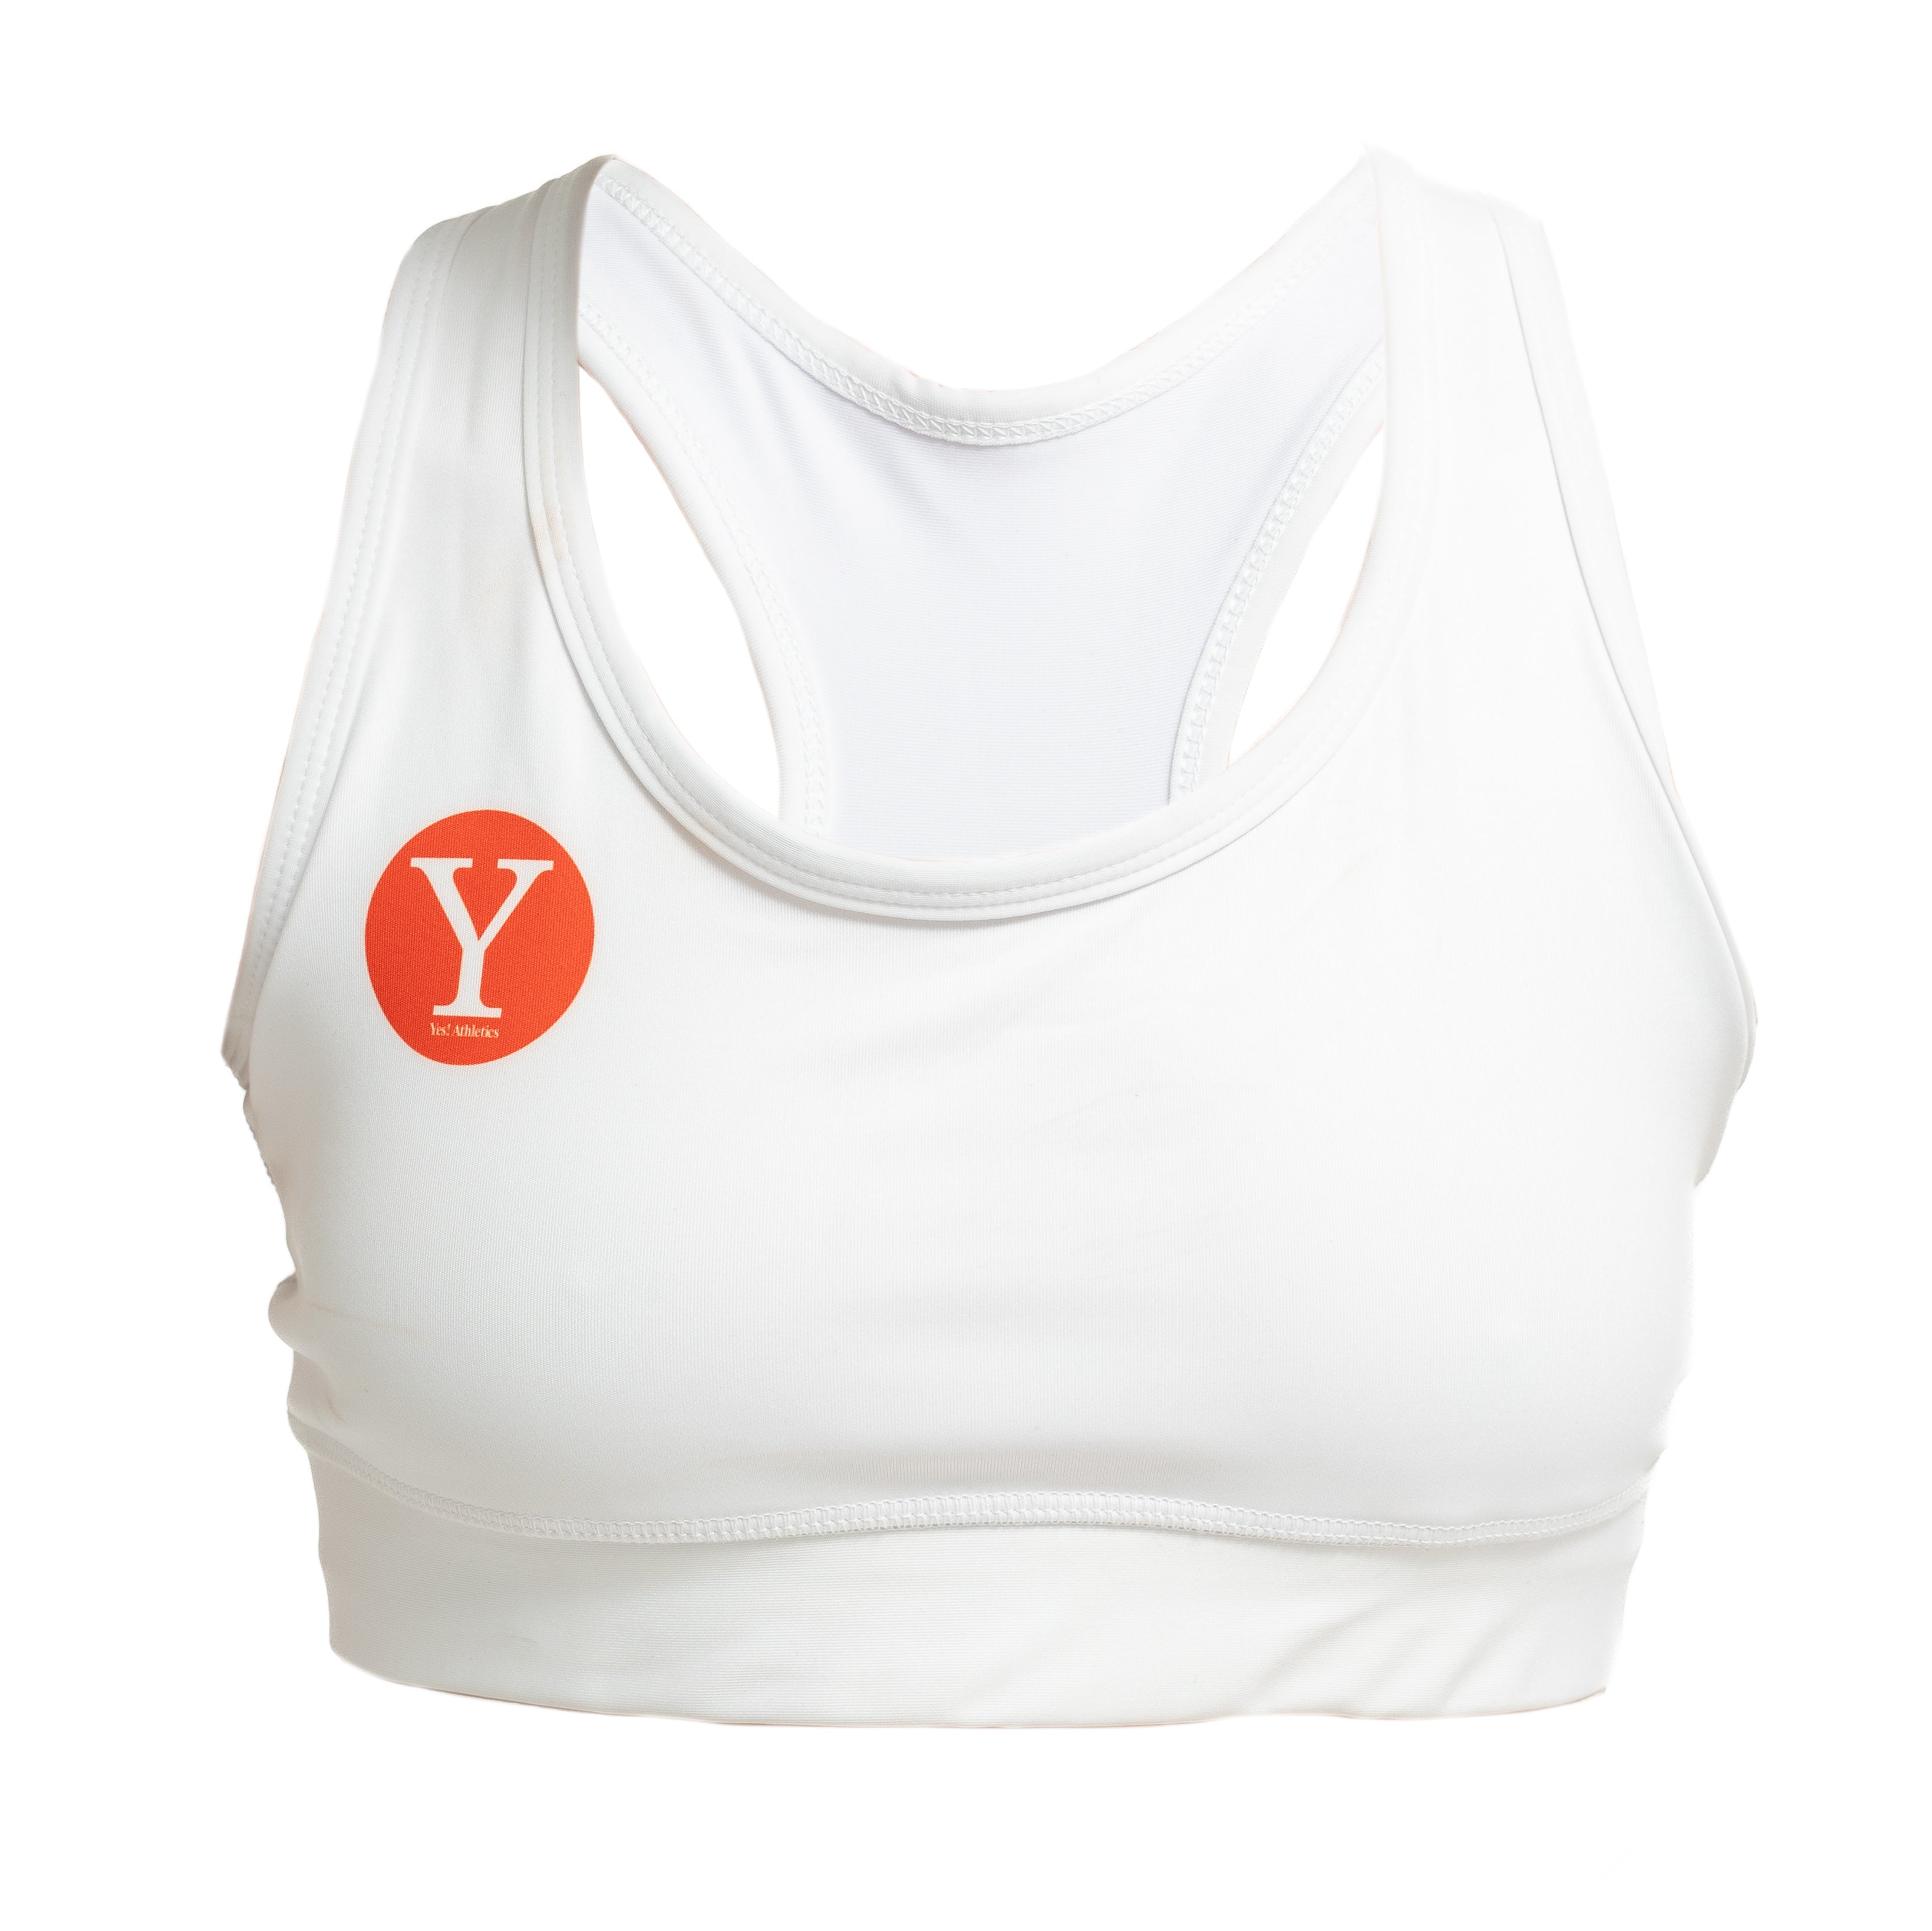 Yes! Athletics White high-compression sports bra